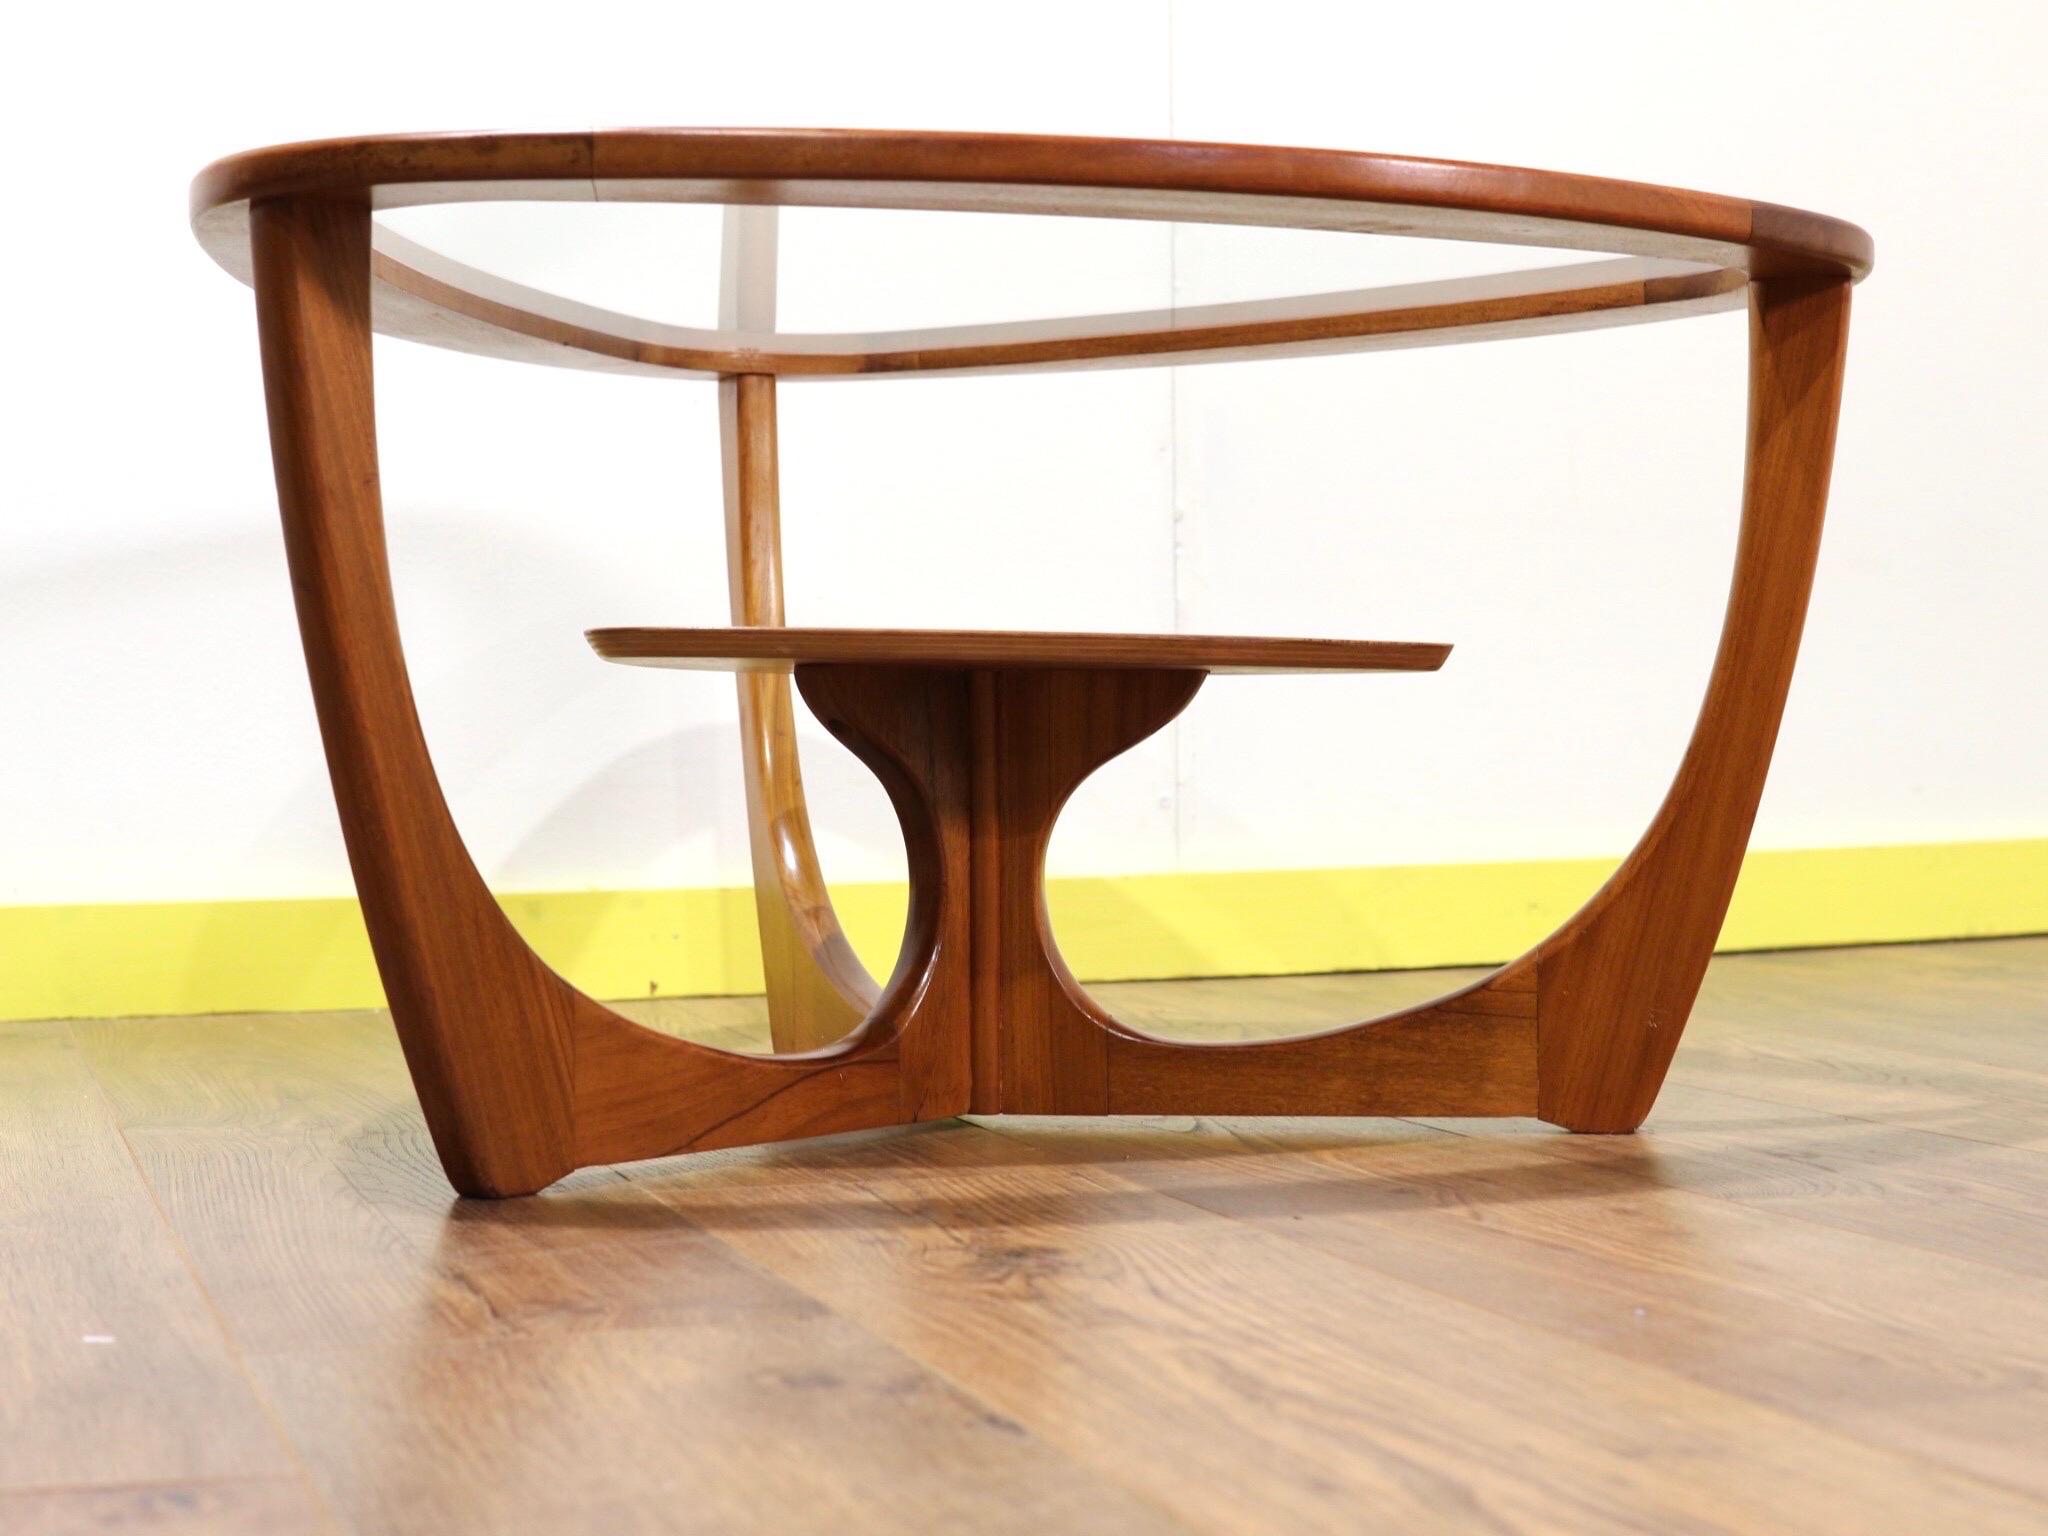 20th Century Mid-Century Modern Teak Triangular Glass Coffee Table